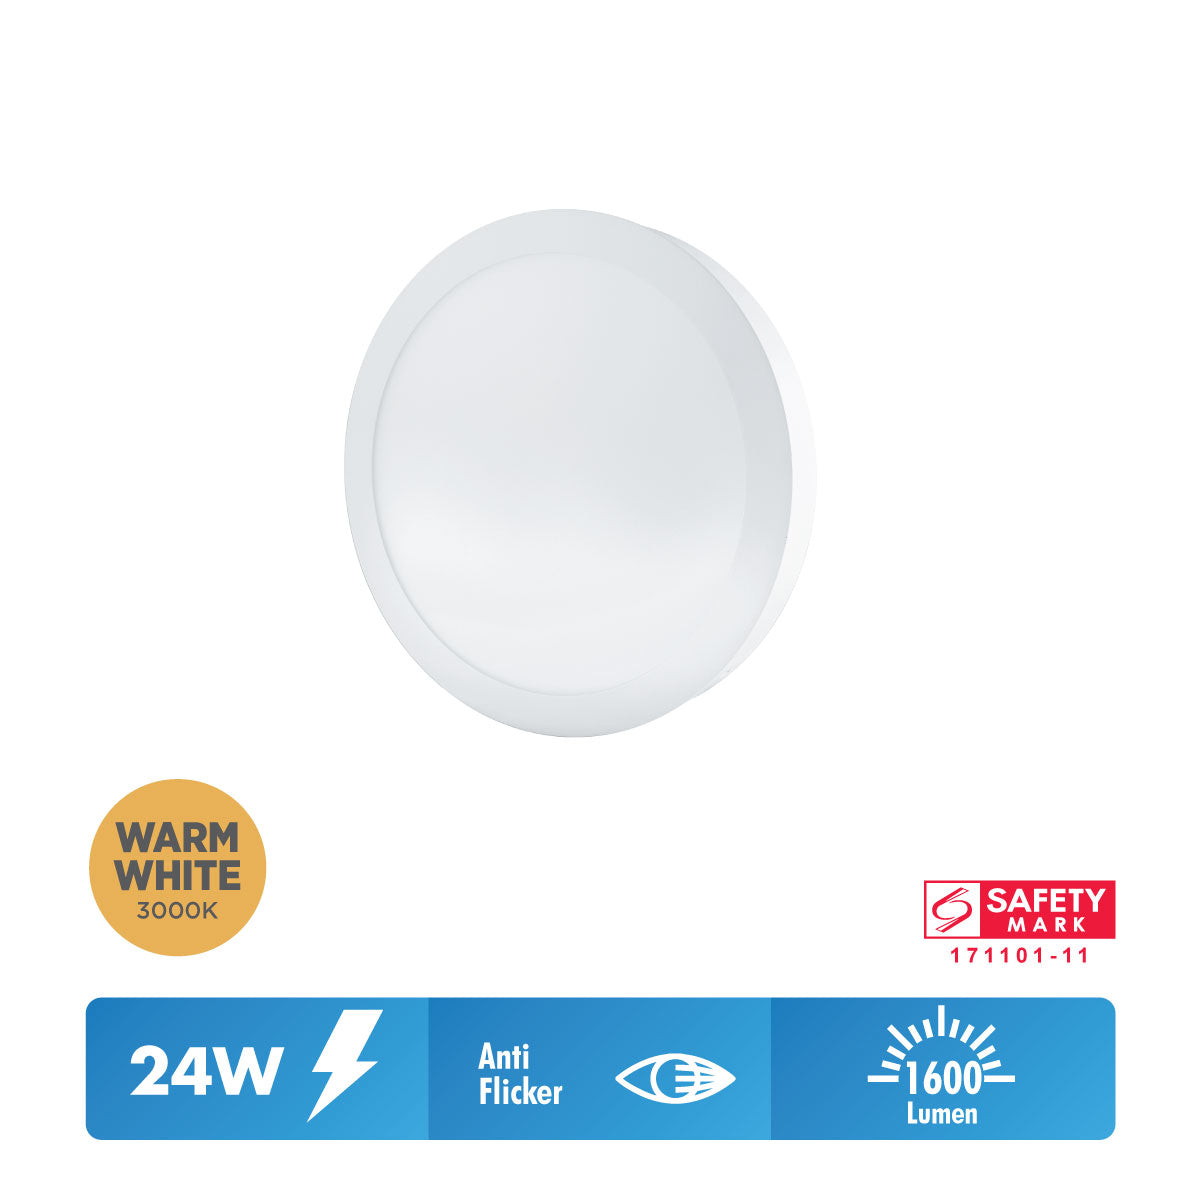 Daiyo LPR 151-WW 24W LED Surfaced Panel Light Round Shape (Warm White)